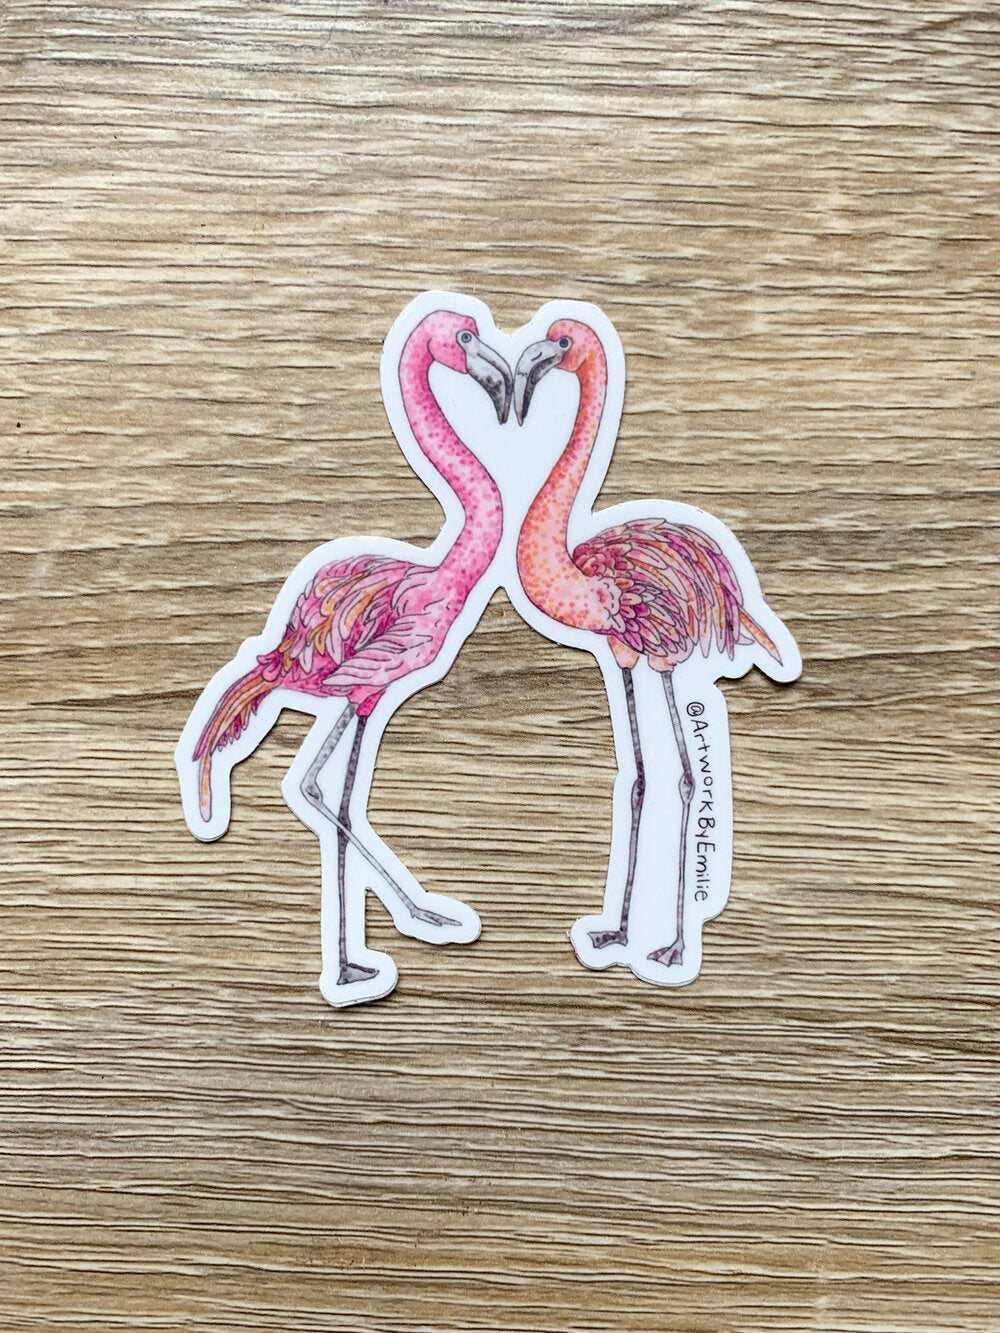 Flamingo Love Sticker